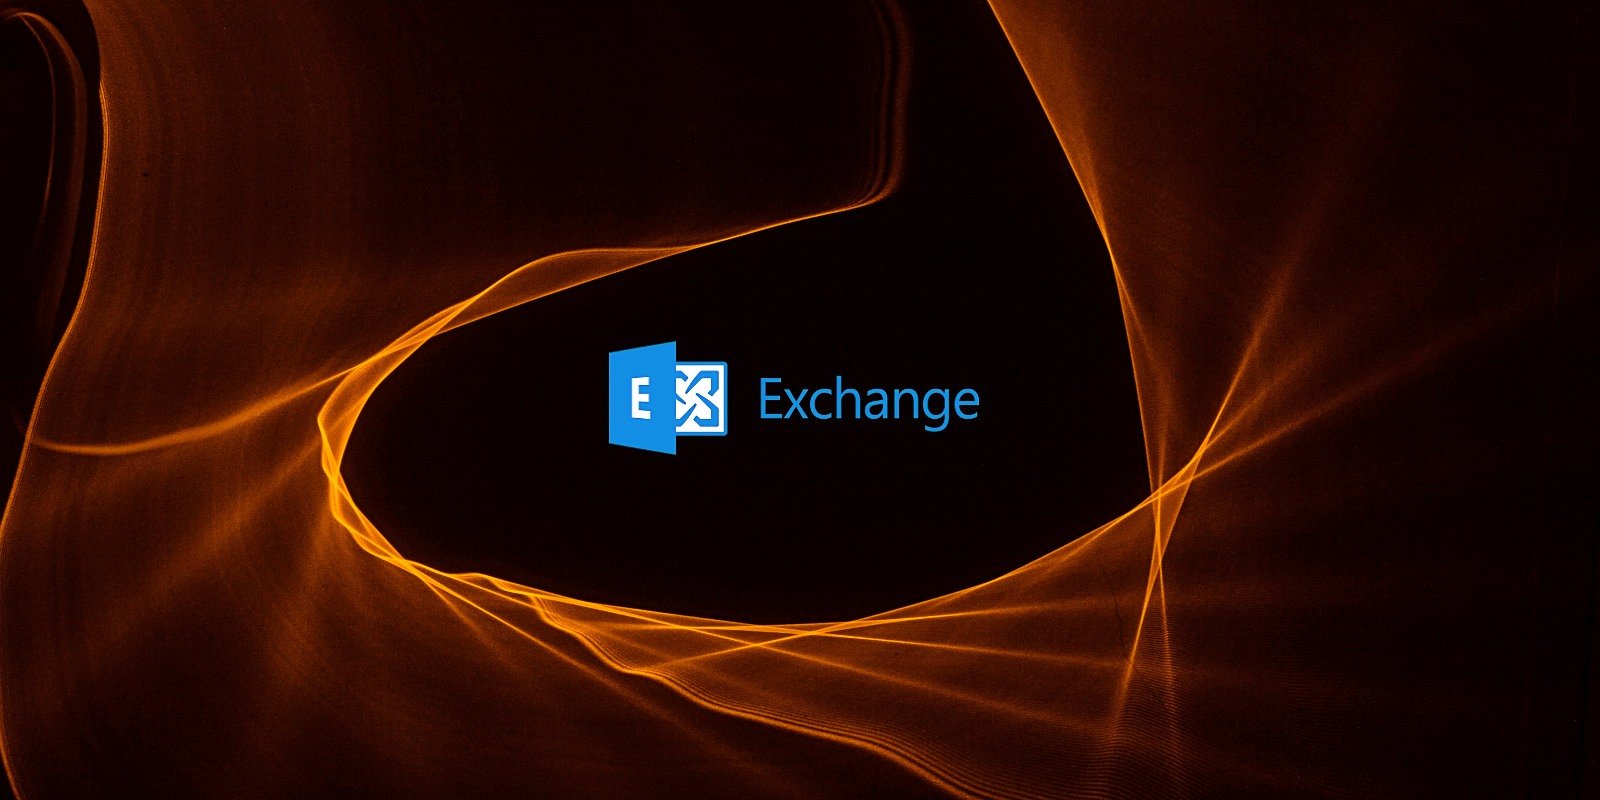 New Microsoft Exchange zero-days allow RCE, data theft attacks – BleepingComputer